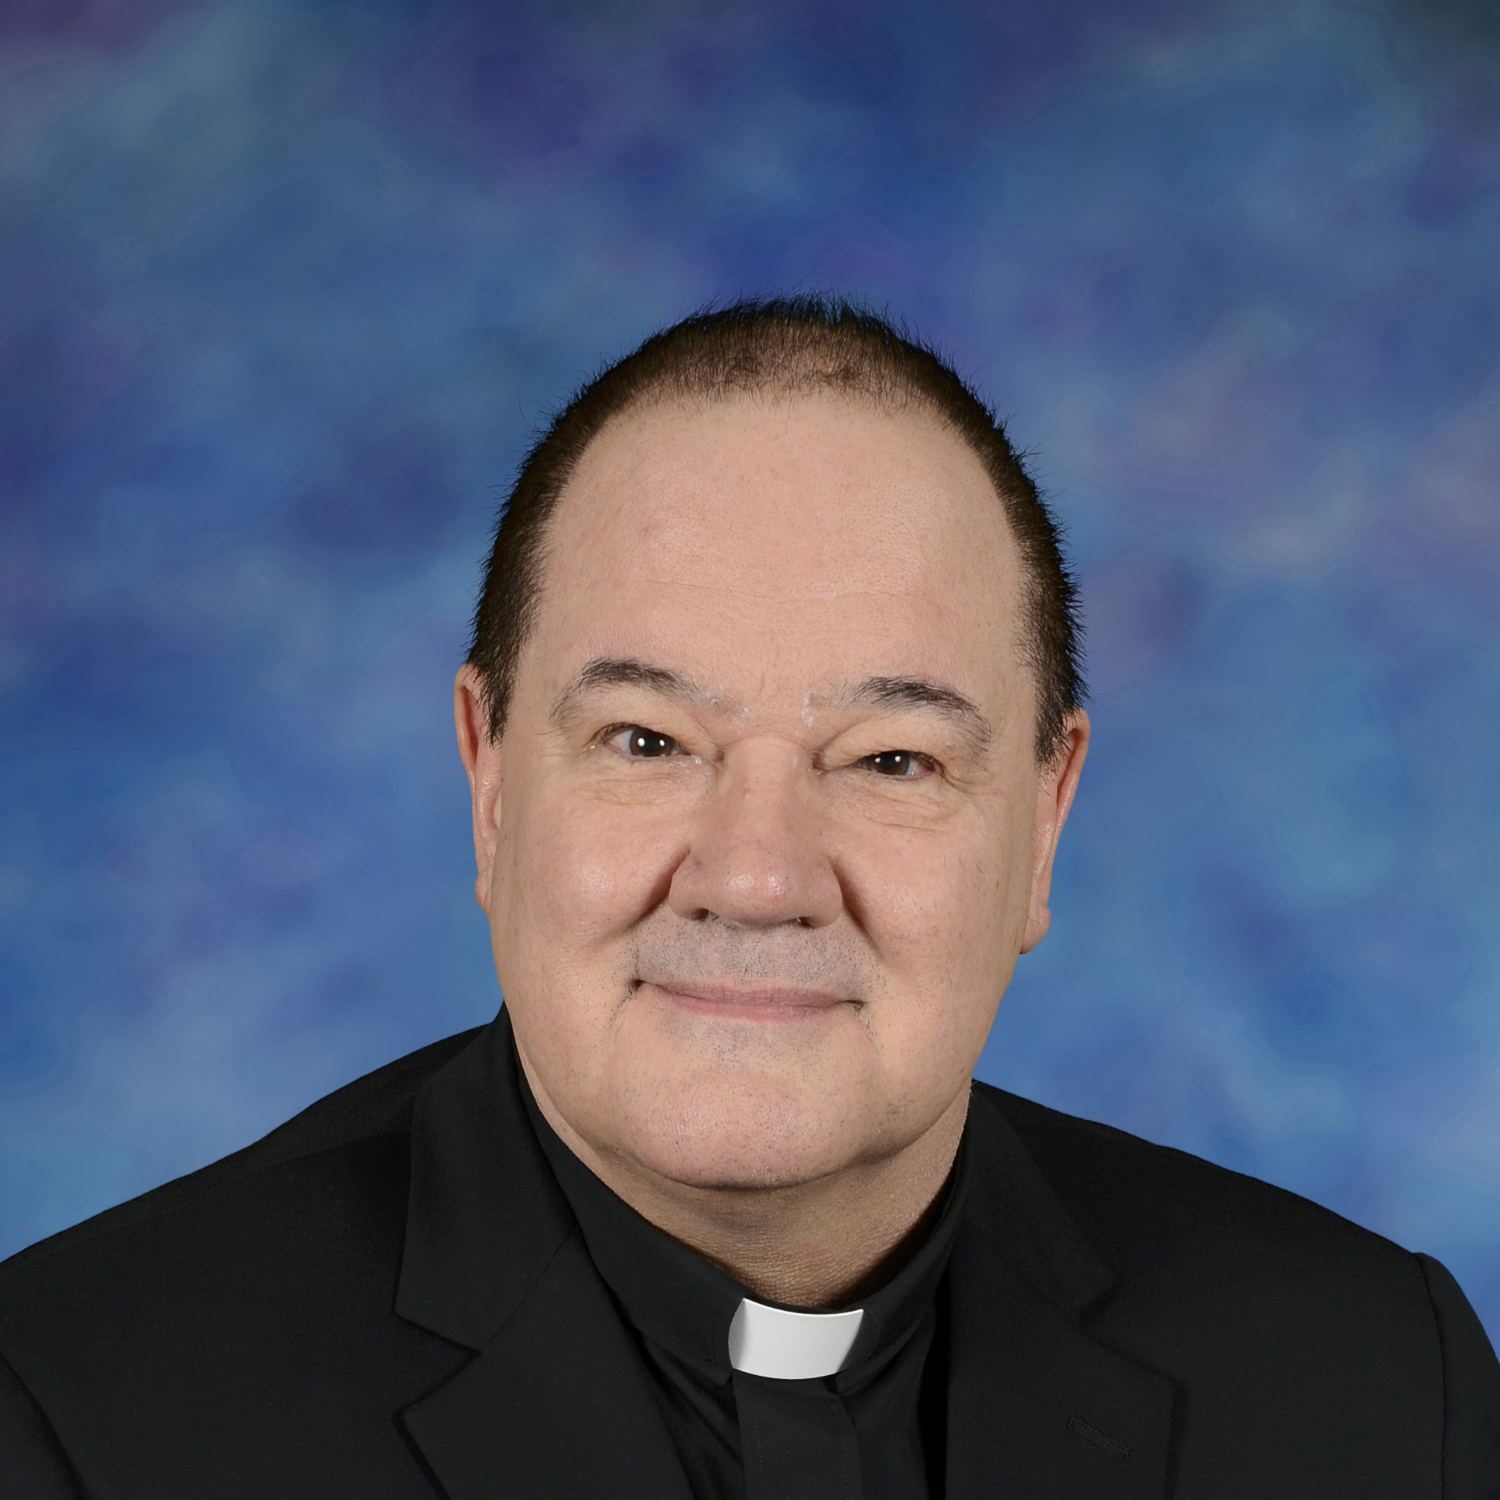 Fr. Scott Hebden